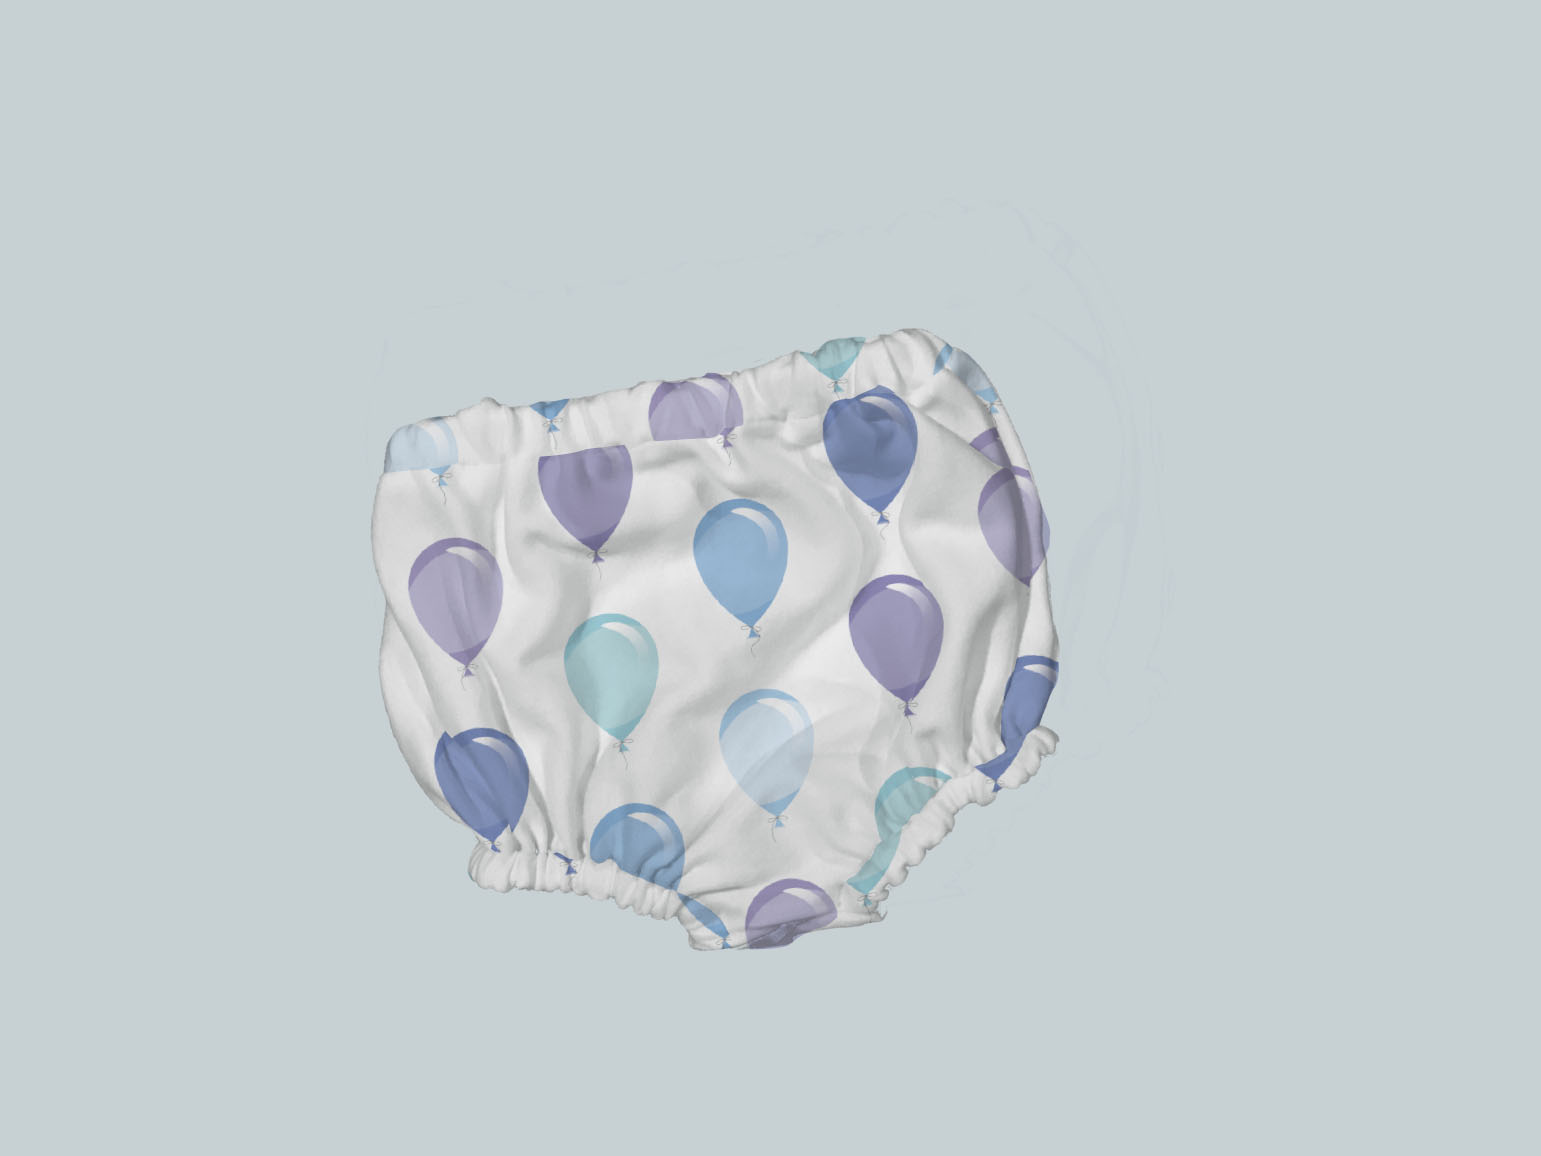 Bummies/Diaper Cover - Balloons